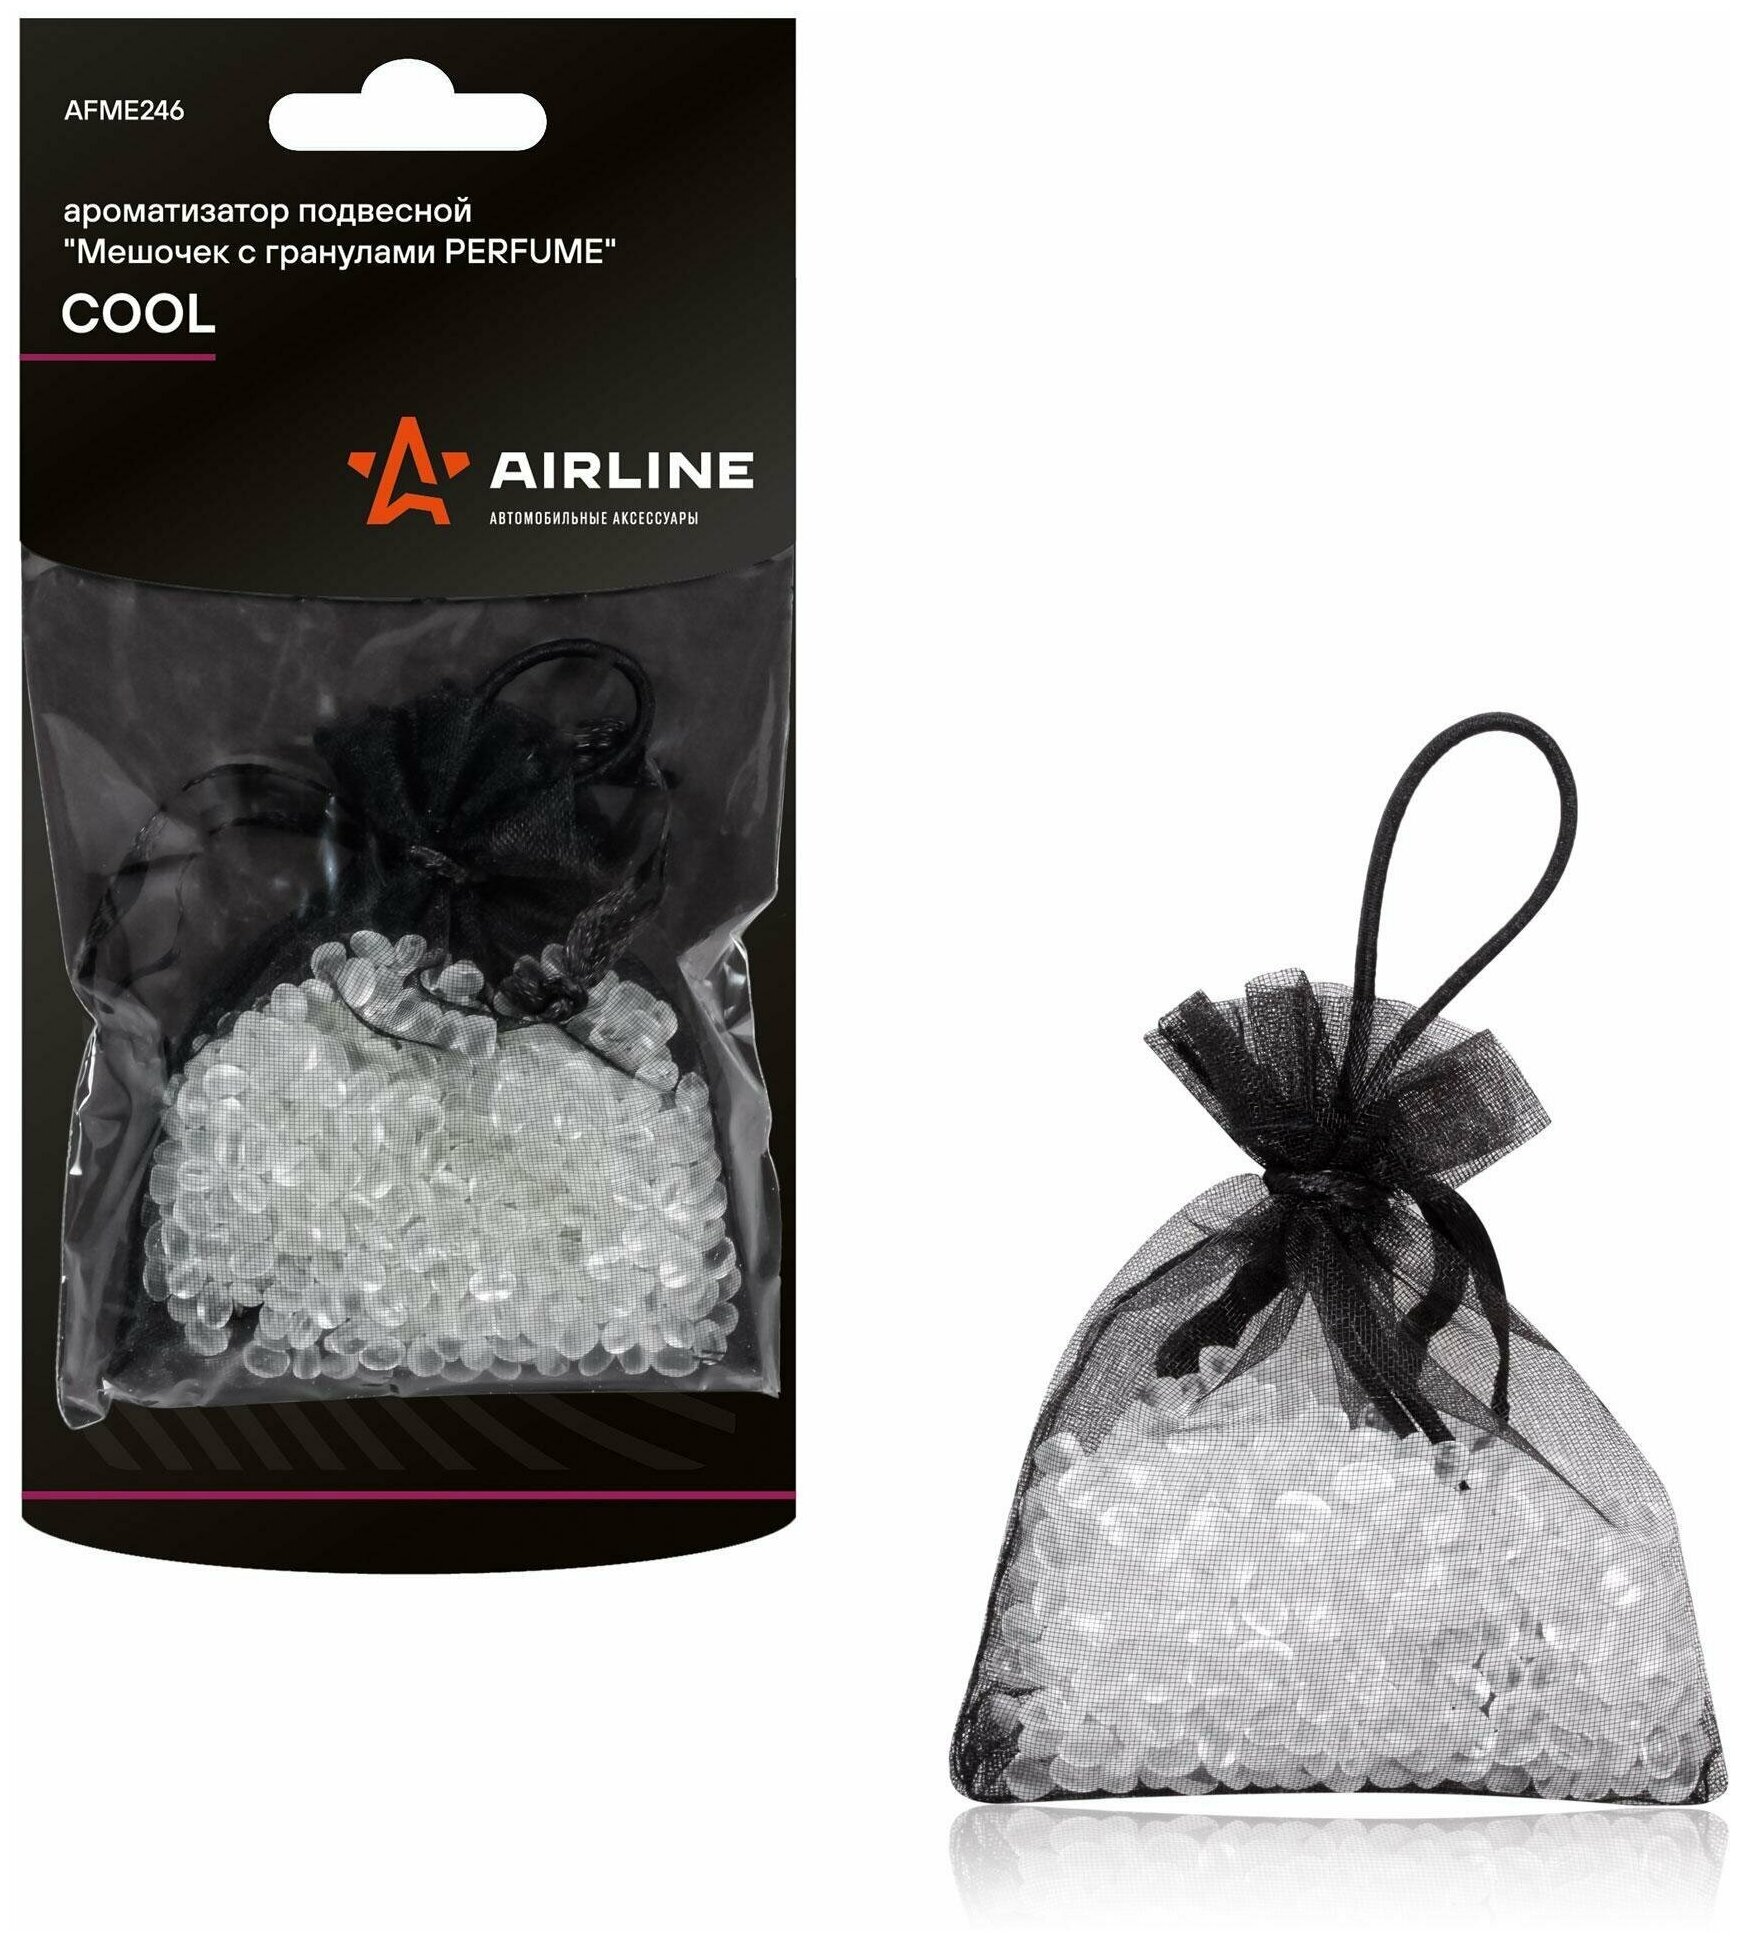 AIRLINE Ароматизатор подвесной Мешочек с гранулами COOL (AIRLINE)